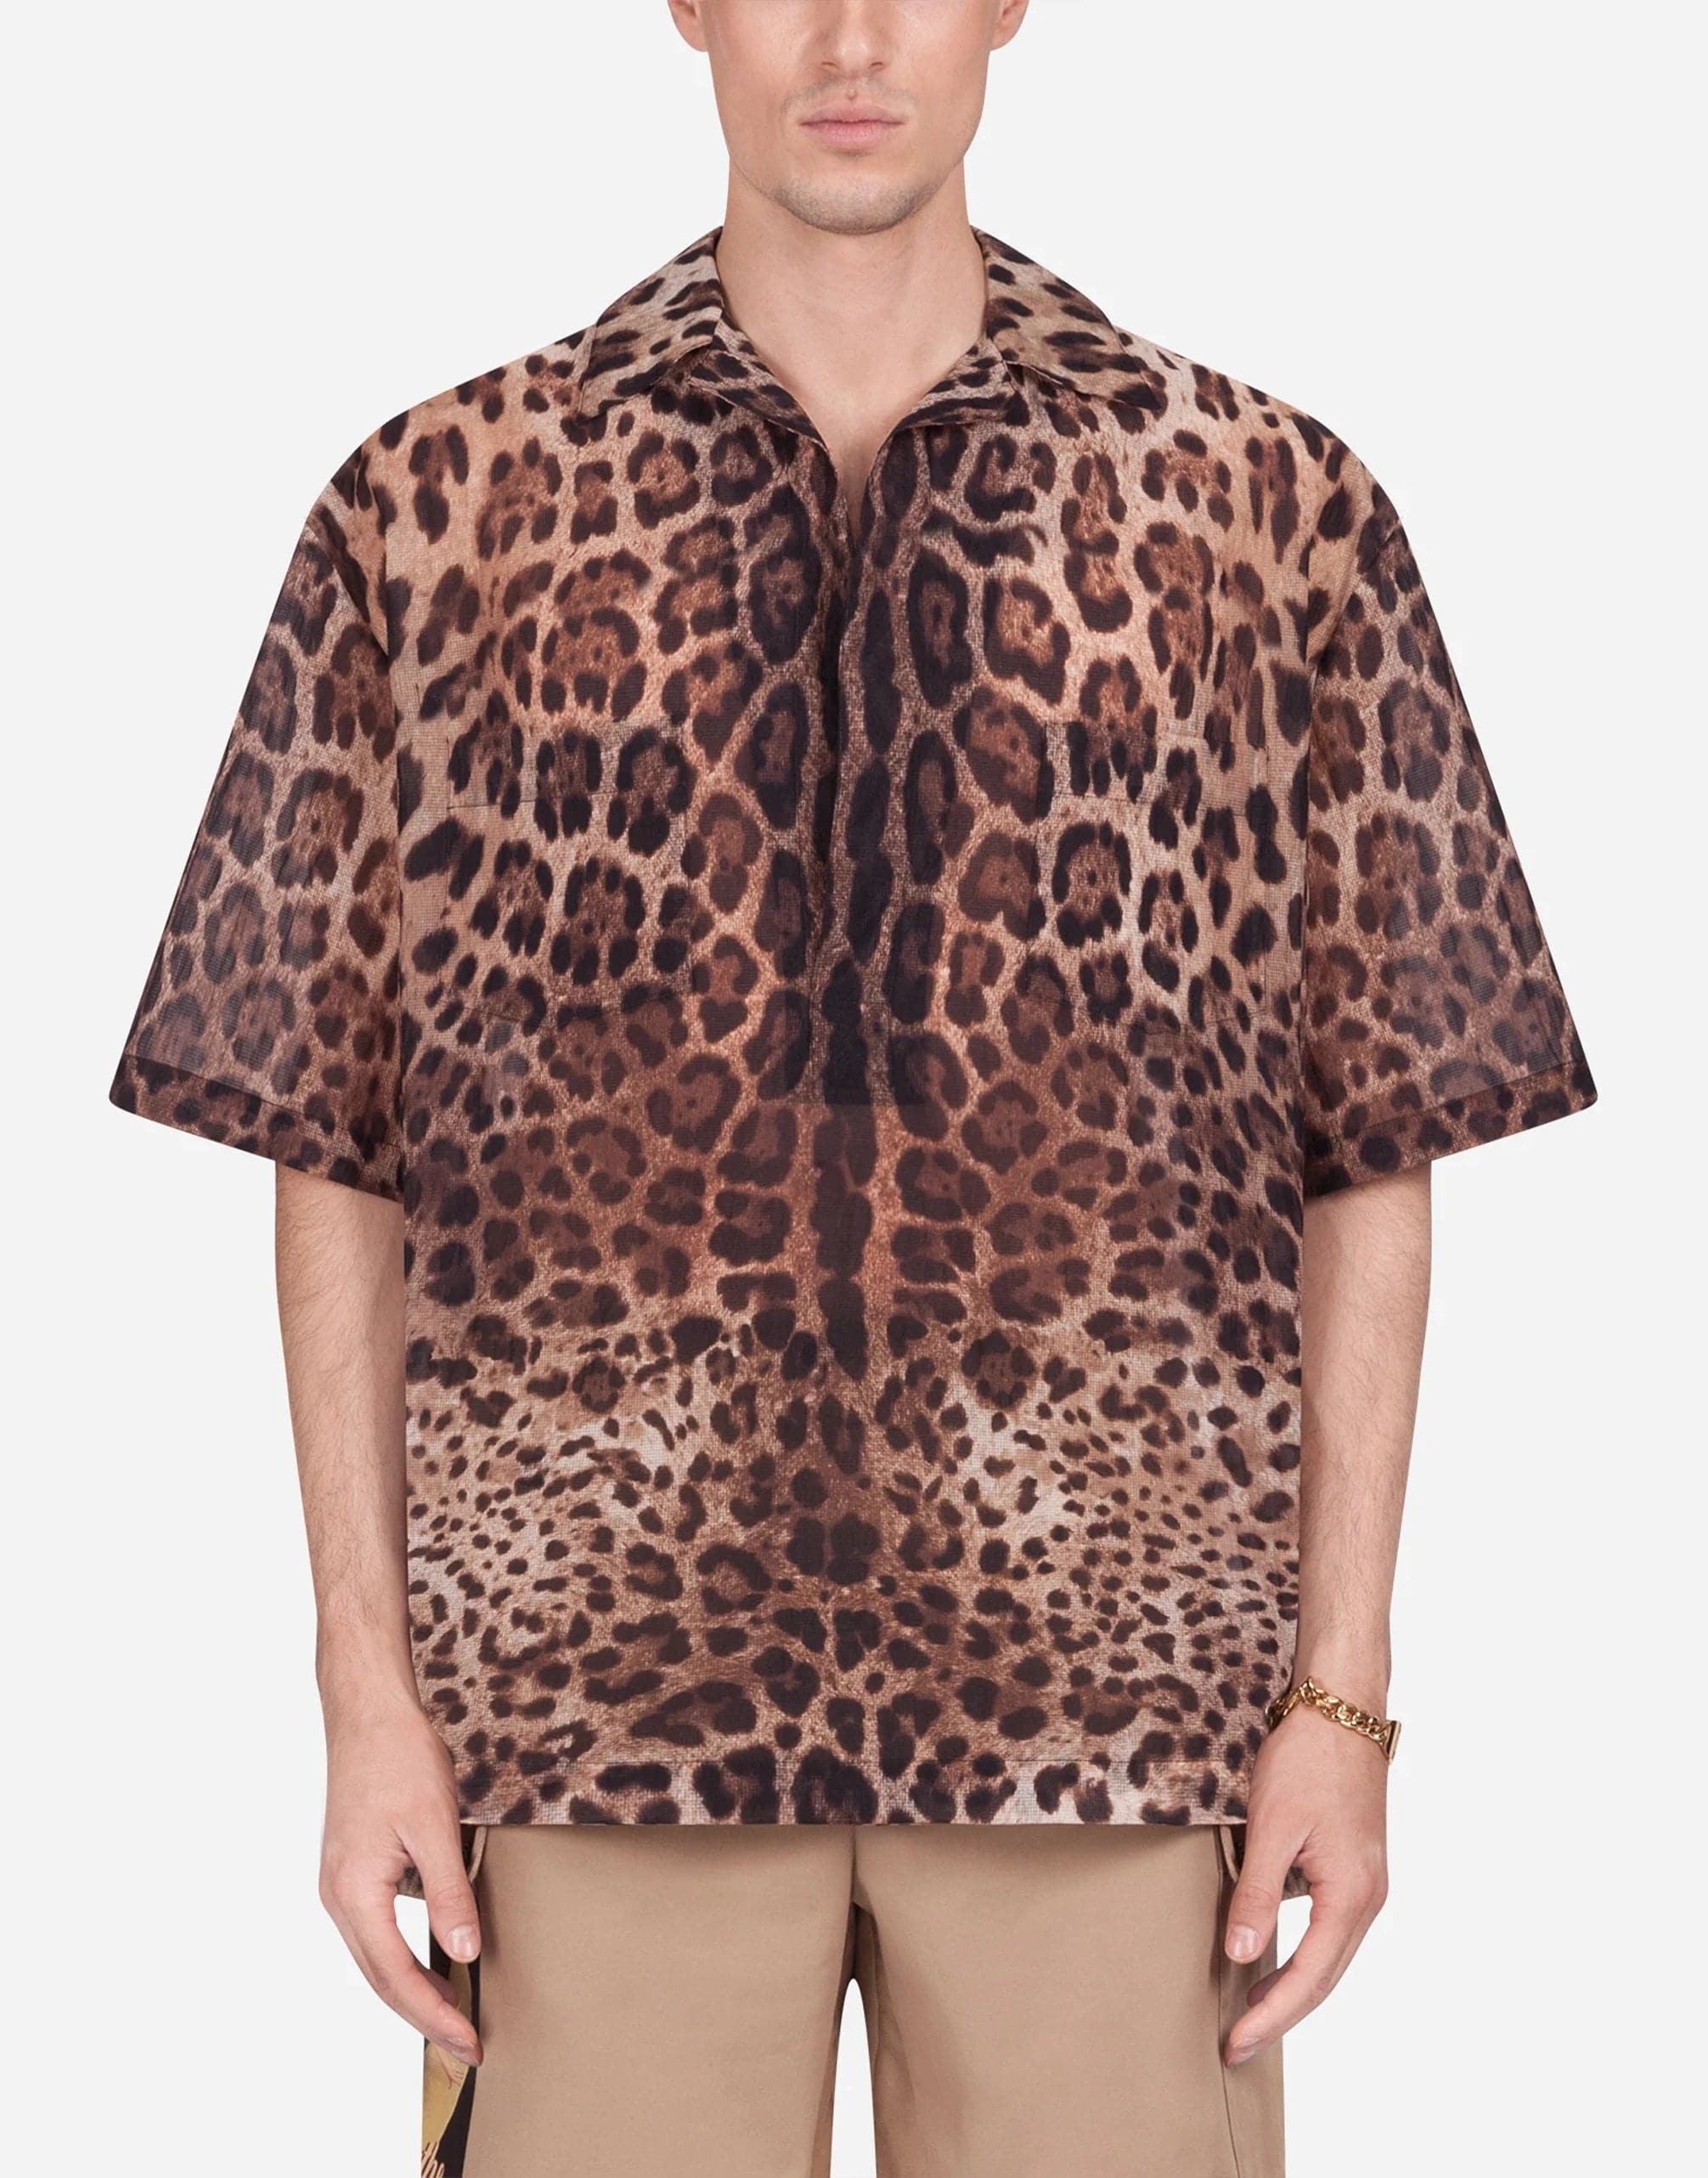 Leopard Print Bowling Shirt